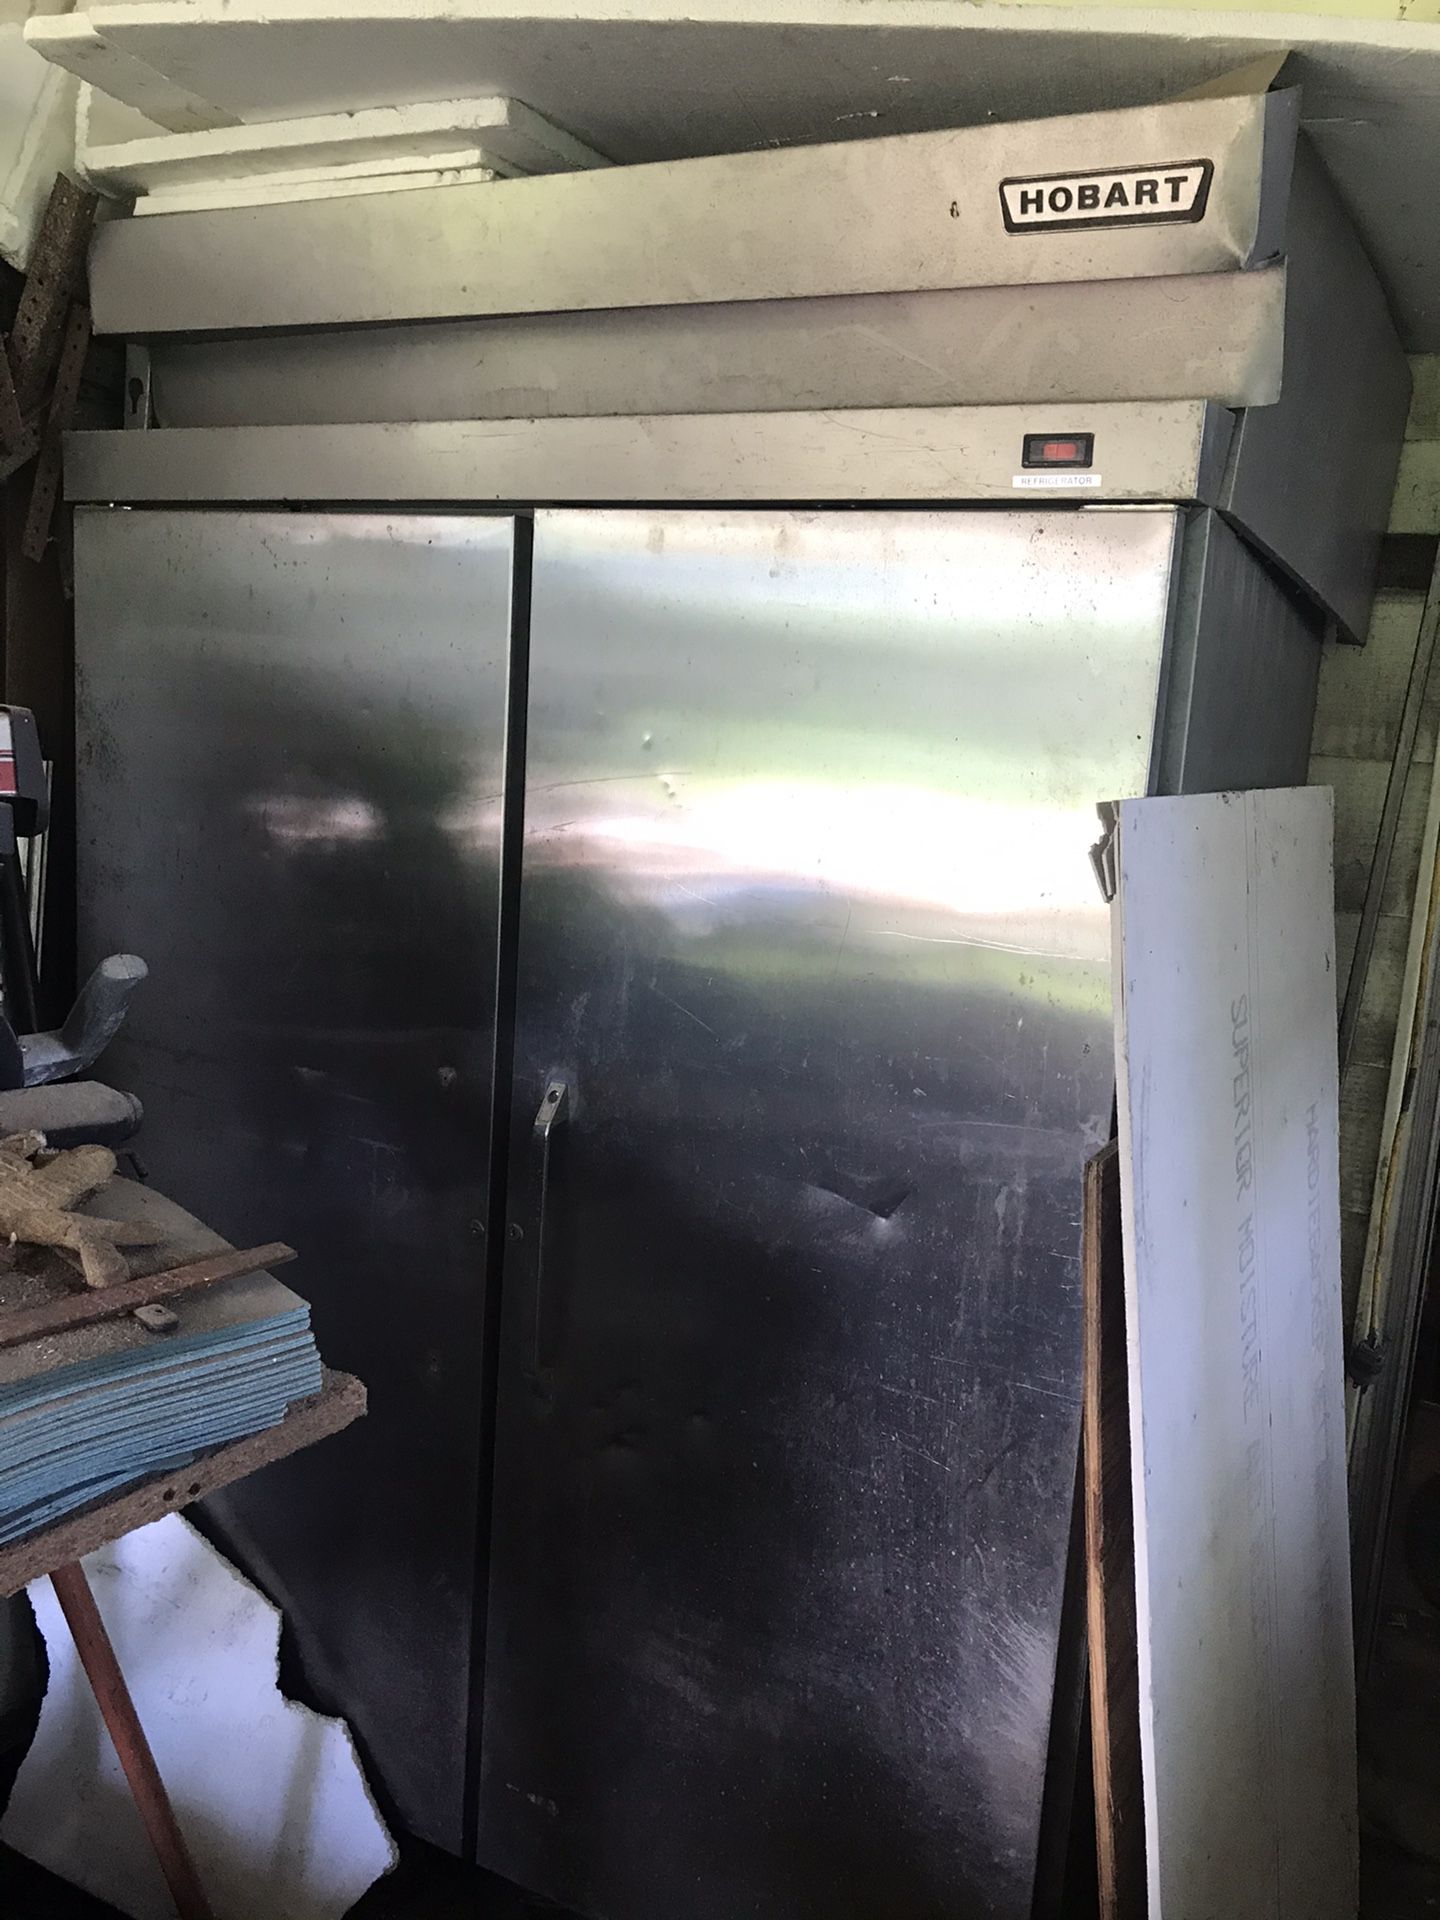 Hobart commercial refrigerator!!